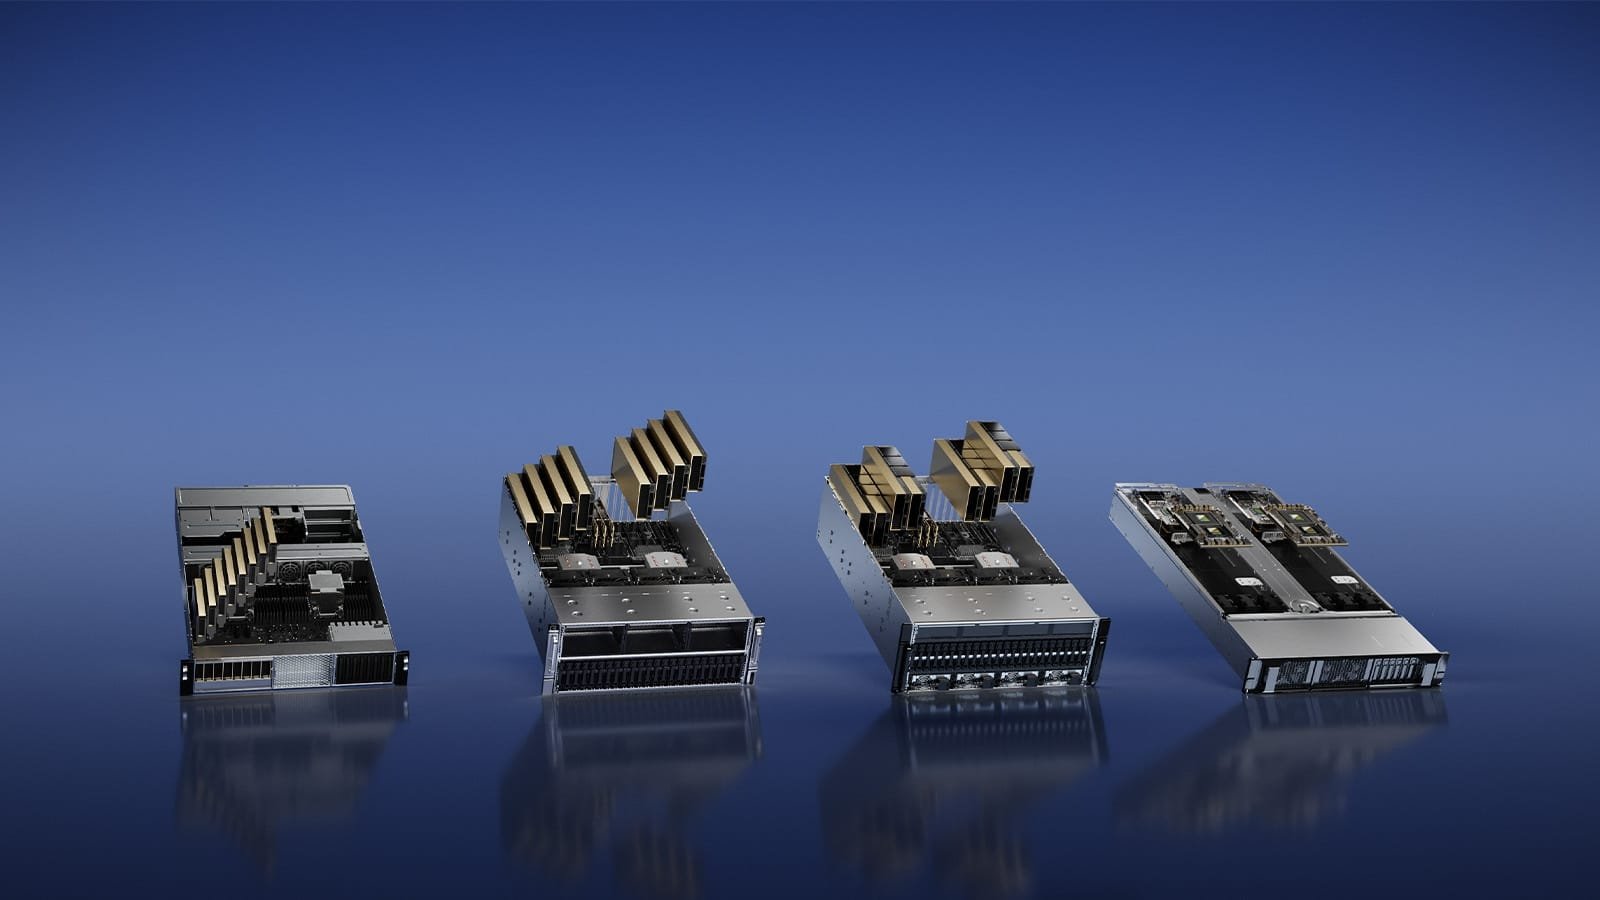 Left to right - L4, L40, H100 NVL and Grace Hopper Superchips, NVIDIA's AI accelerators